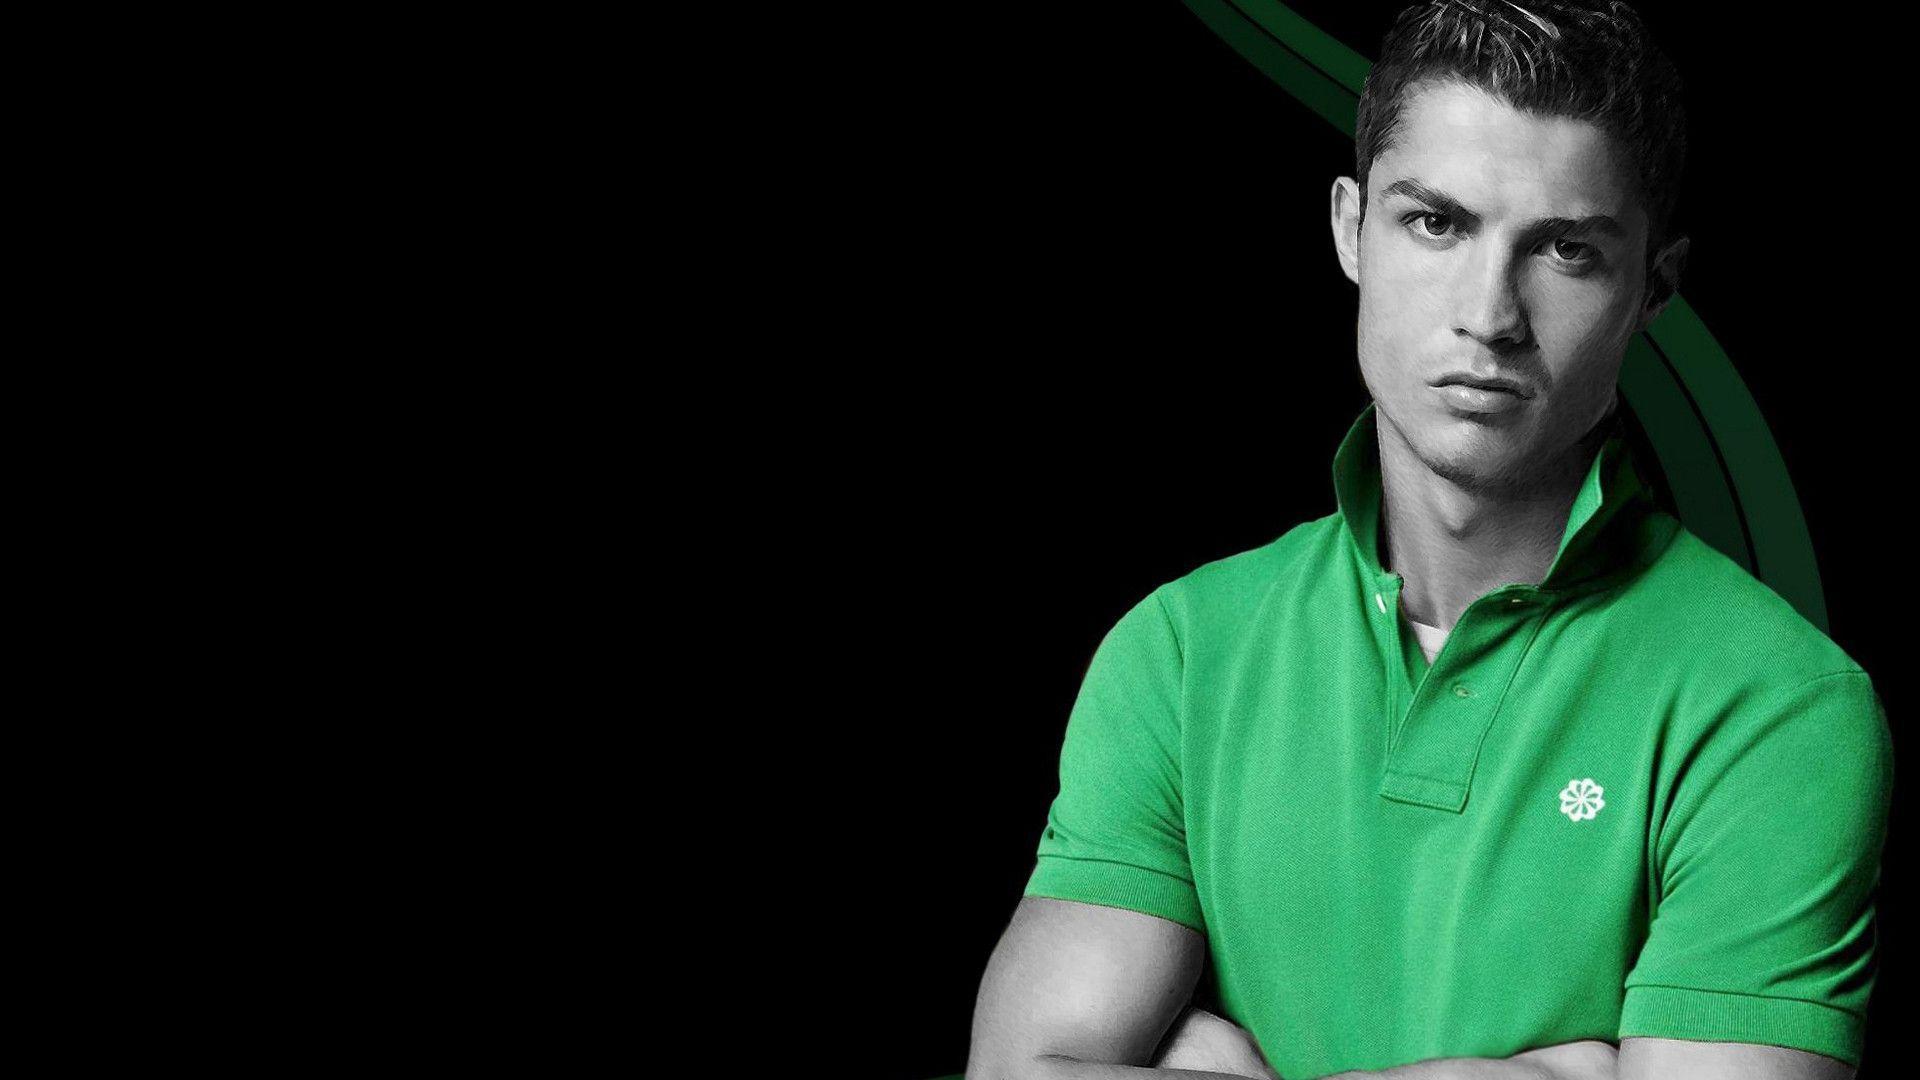 HD Wallpaper of Cristiano Ronaldo. Free HD Wallpaper 2013